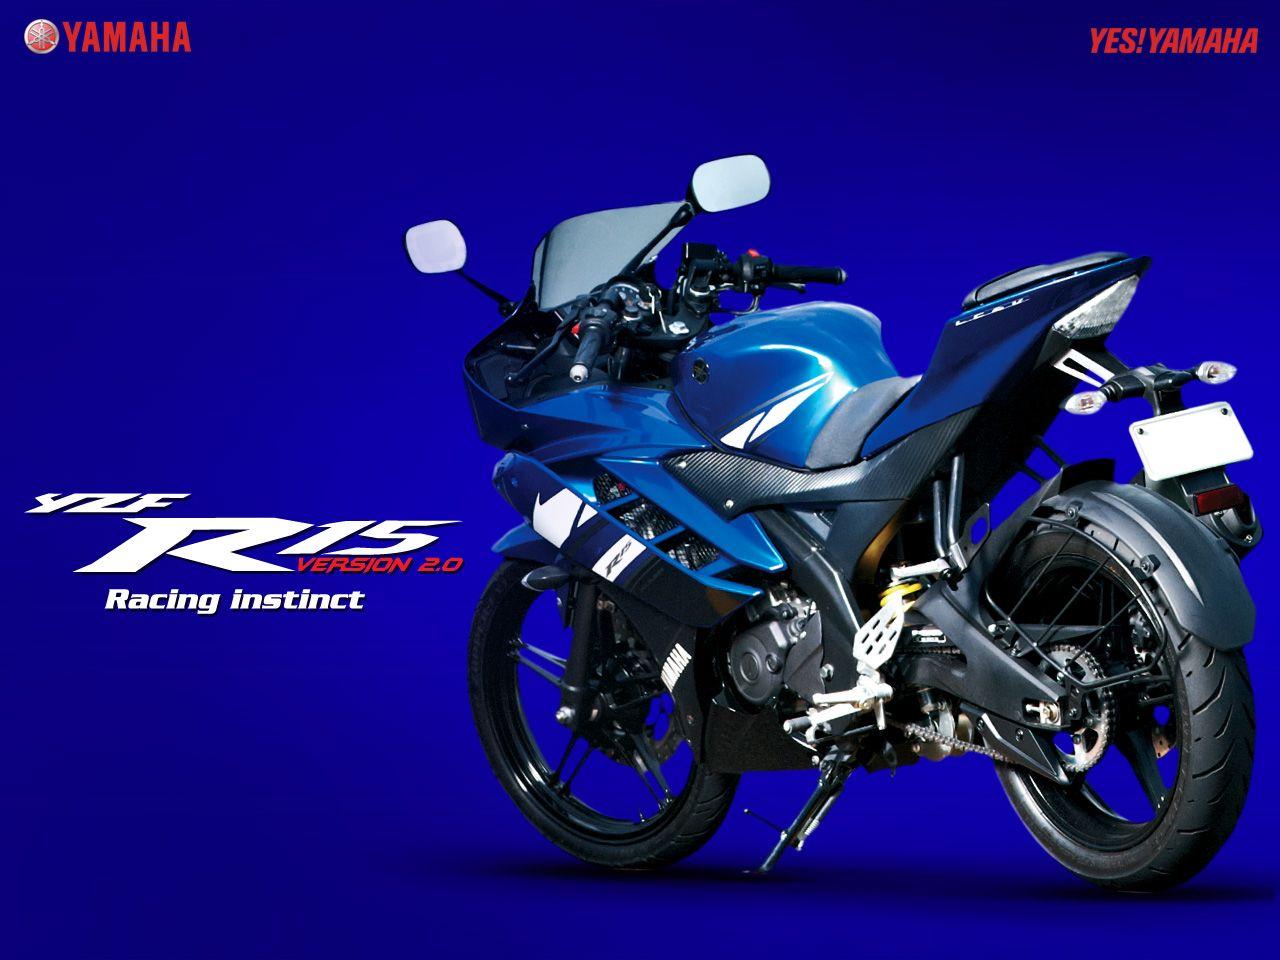 Yamaha YZF R15 Version 2.0 image (2) Wallpaper Buzz